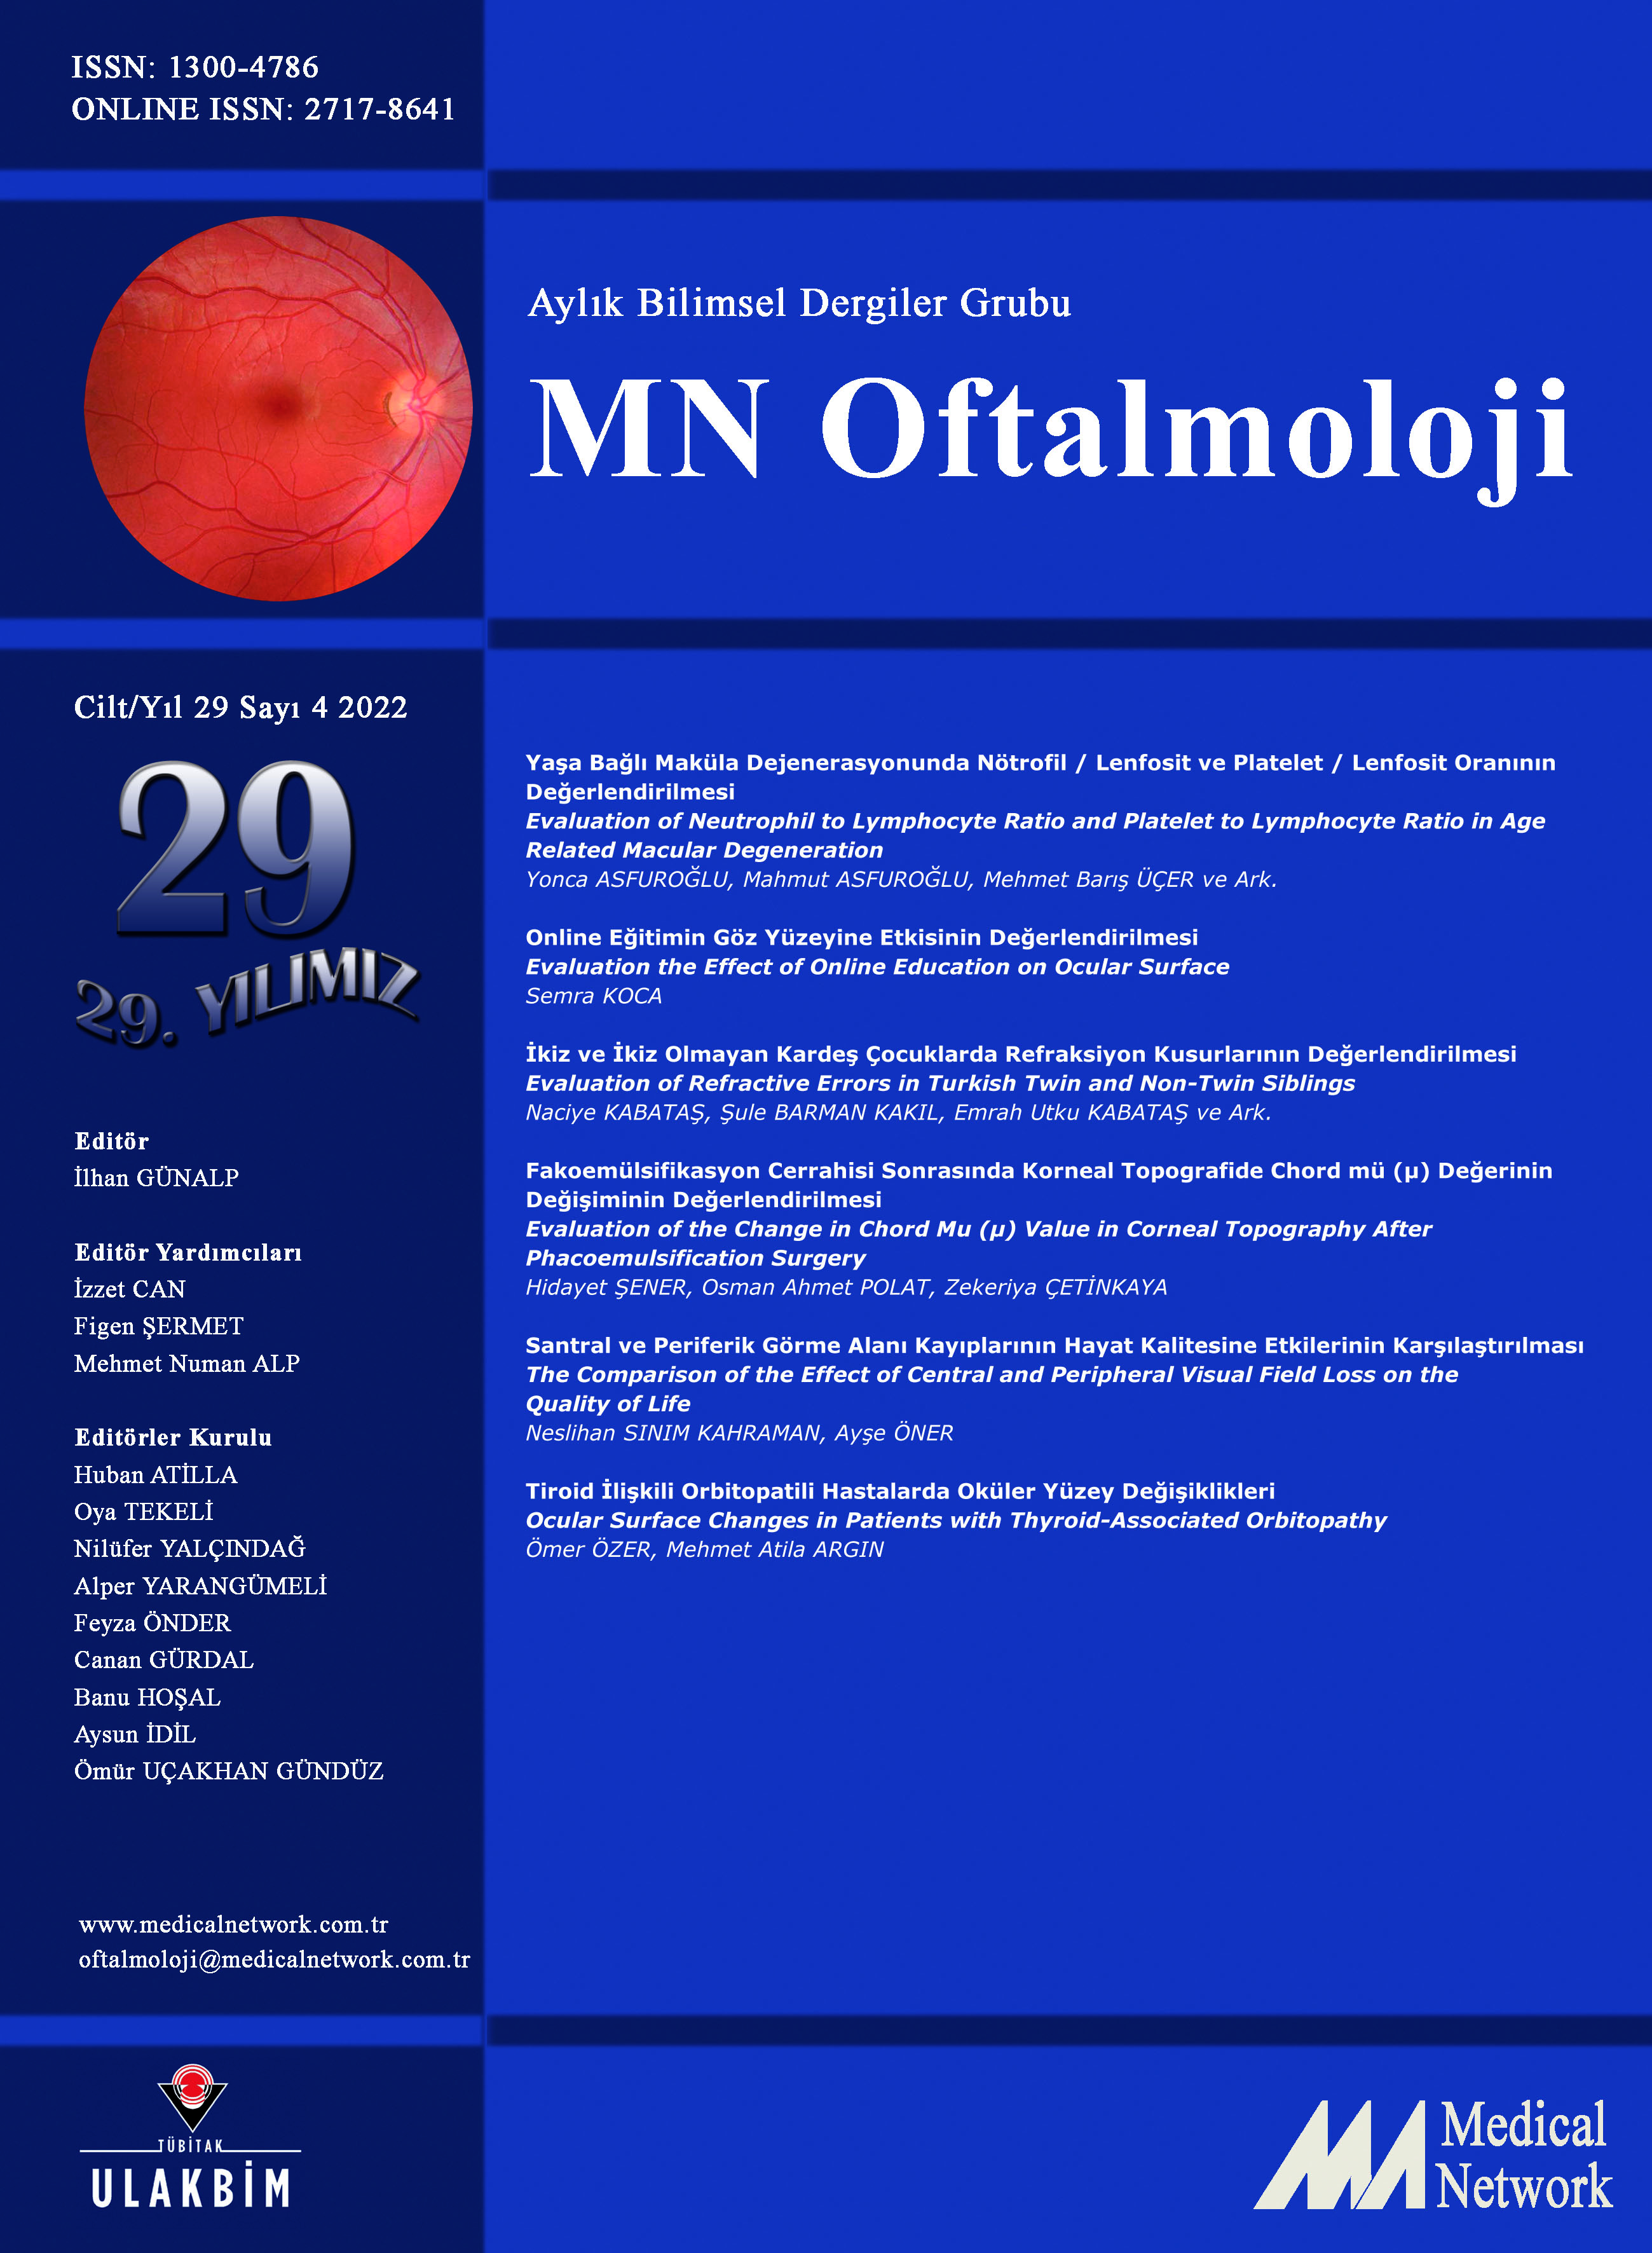 <p>MN Oftalmoloji Cilt: 29 Sayı: 4 2022 (MN Ophthalmology Volume: 29 No: 4 2022)</p>